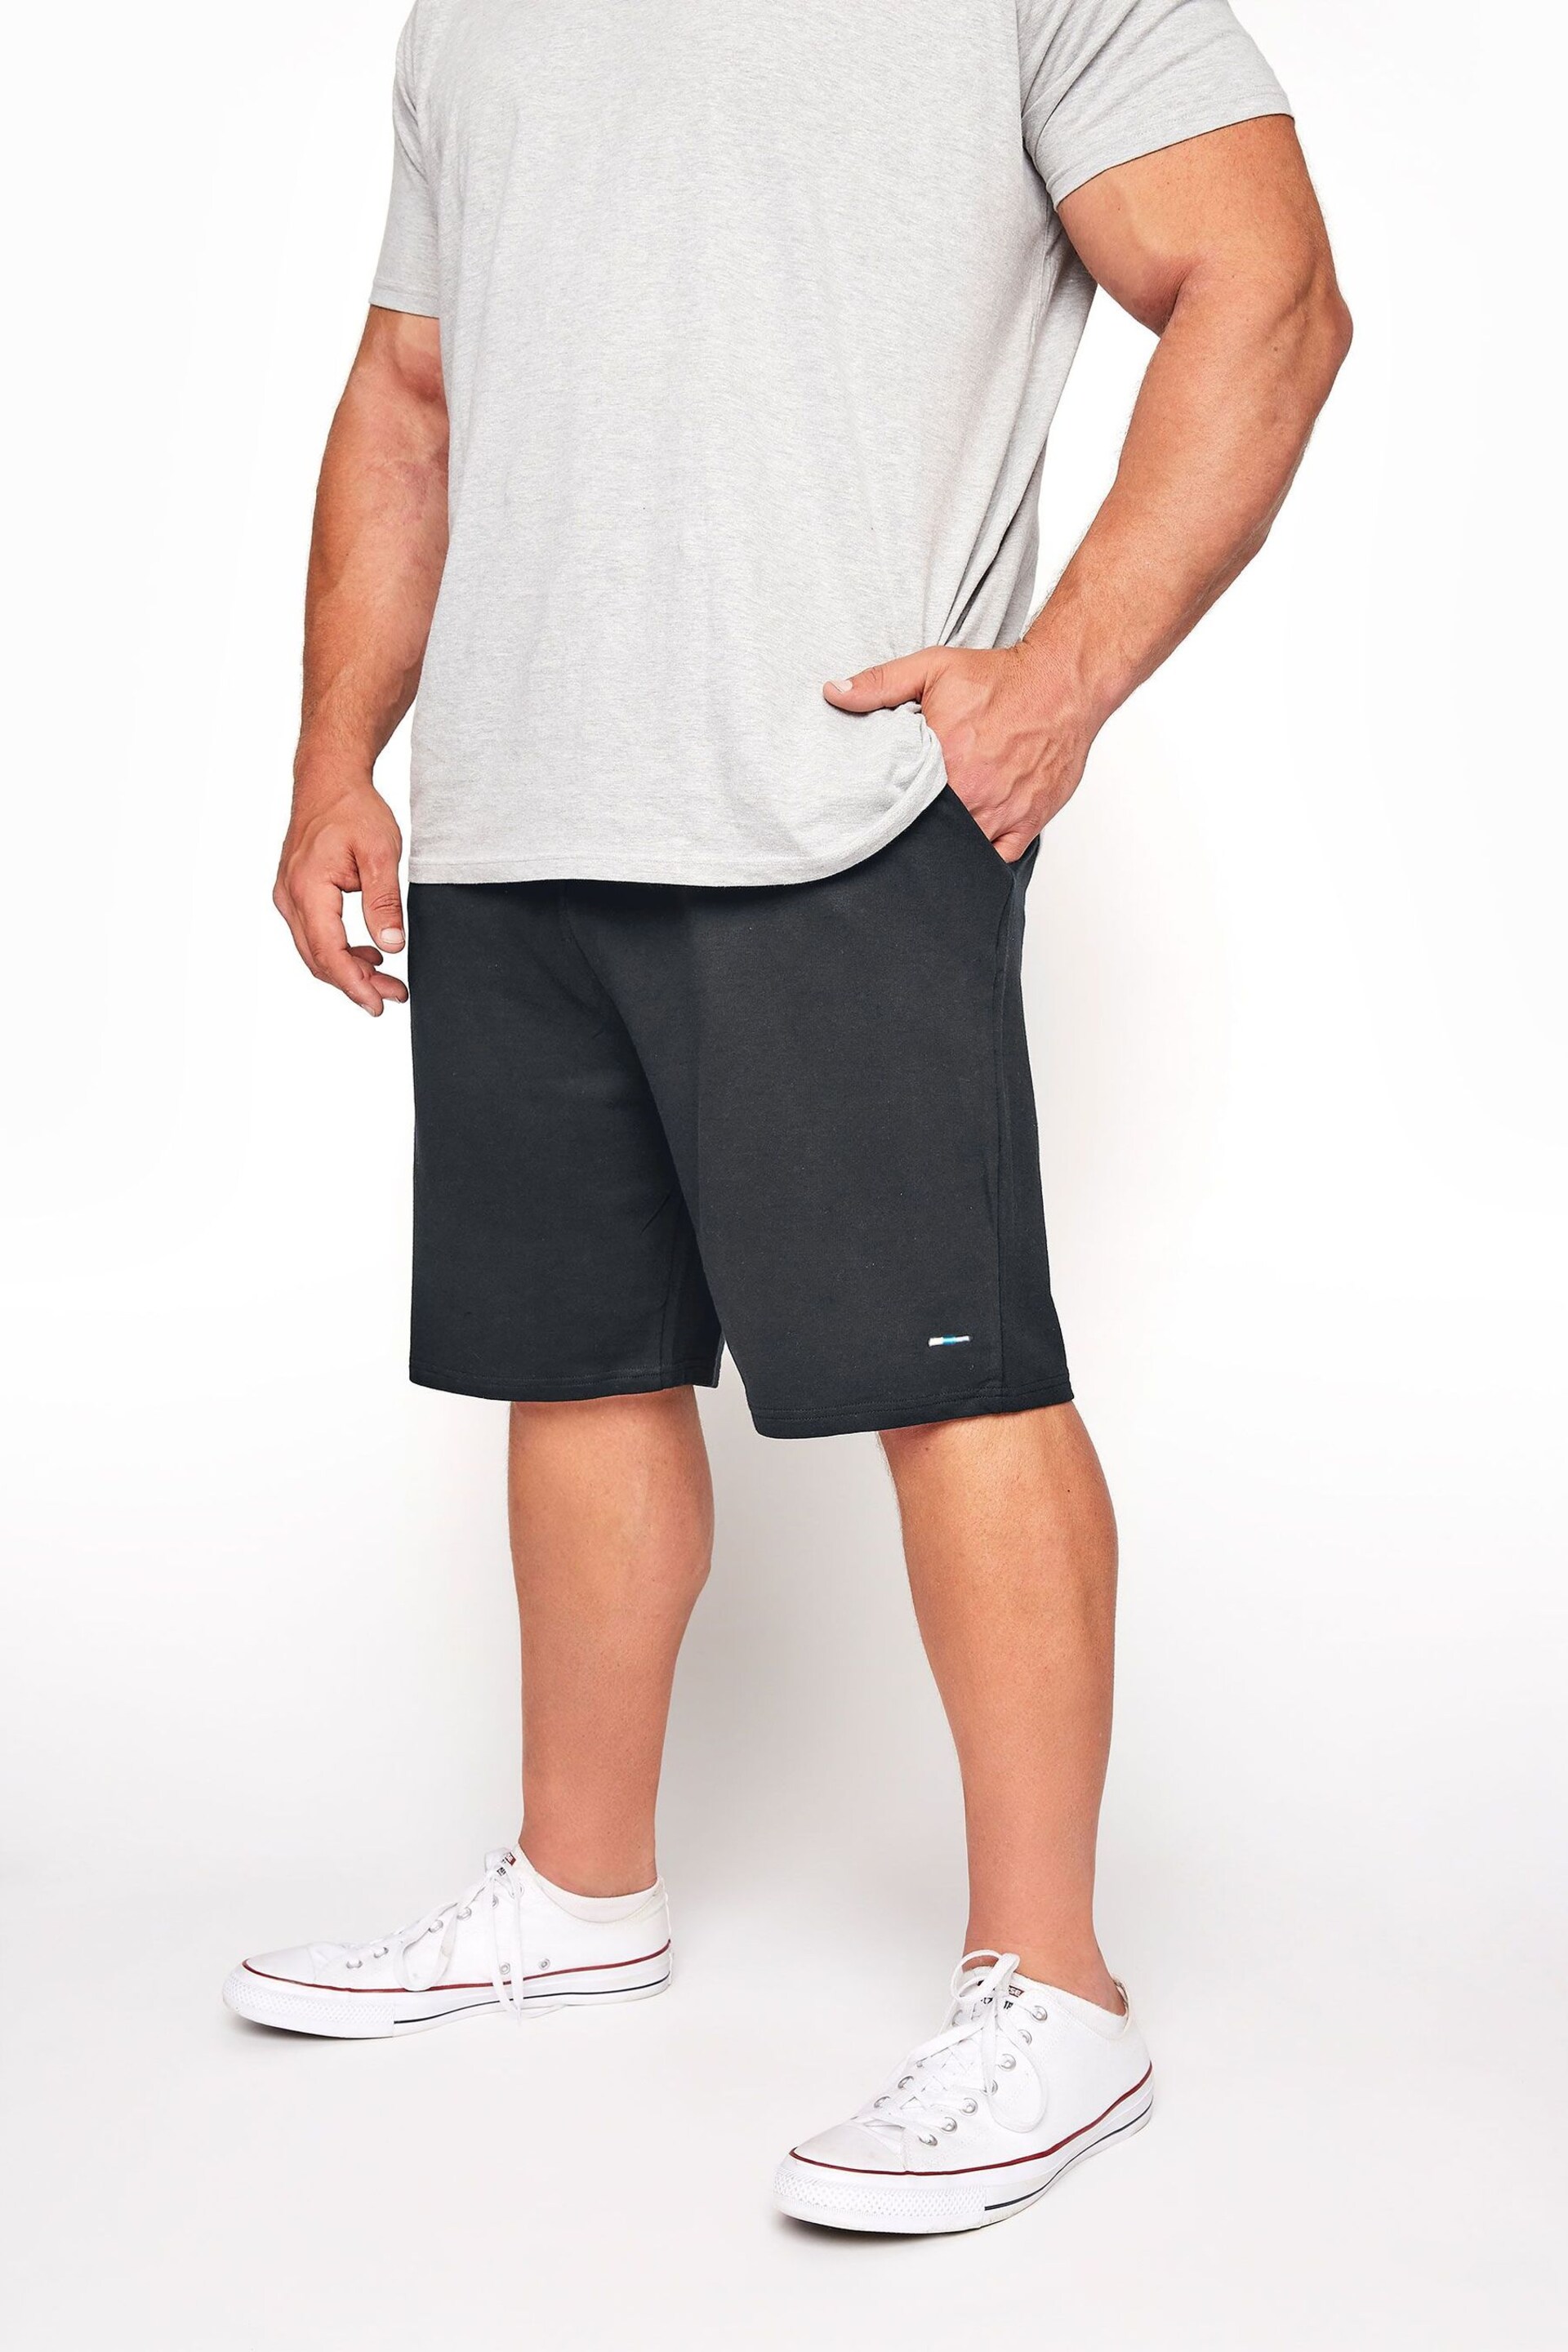 BadRhino Big & Tall Black Essential Jogger Shorts - Image 1 of 3